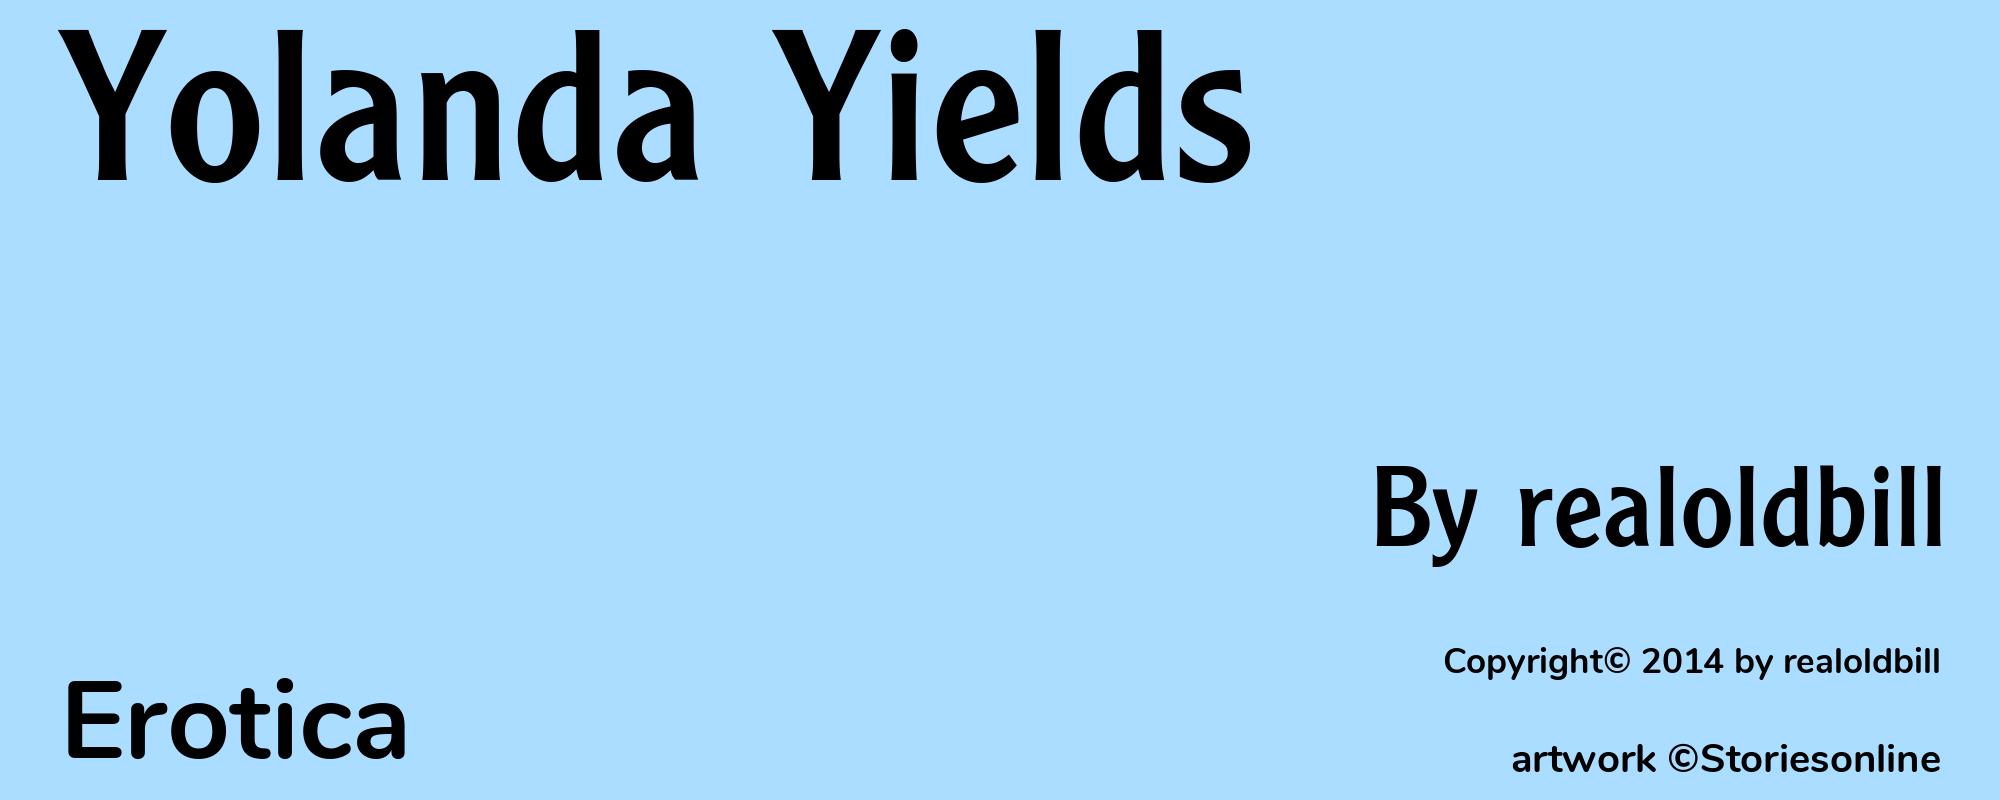 Yolanda Yields - Cover